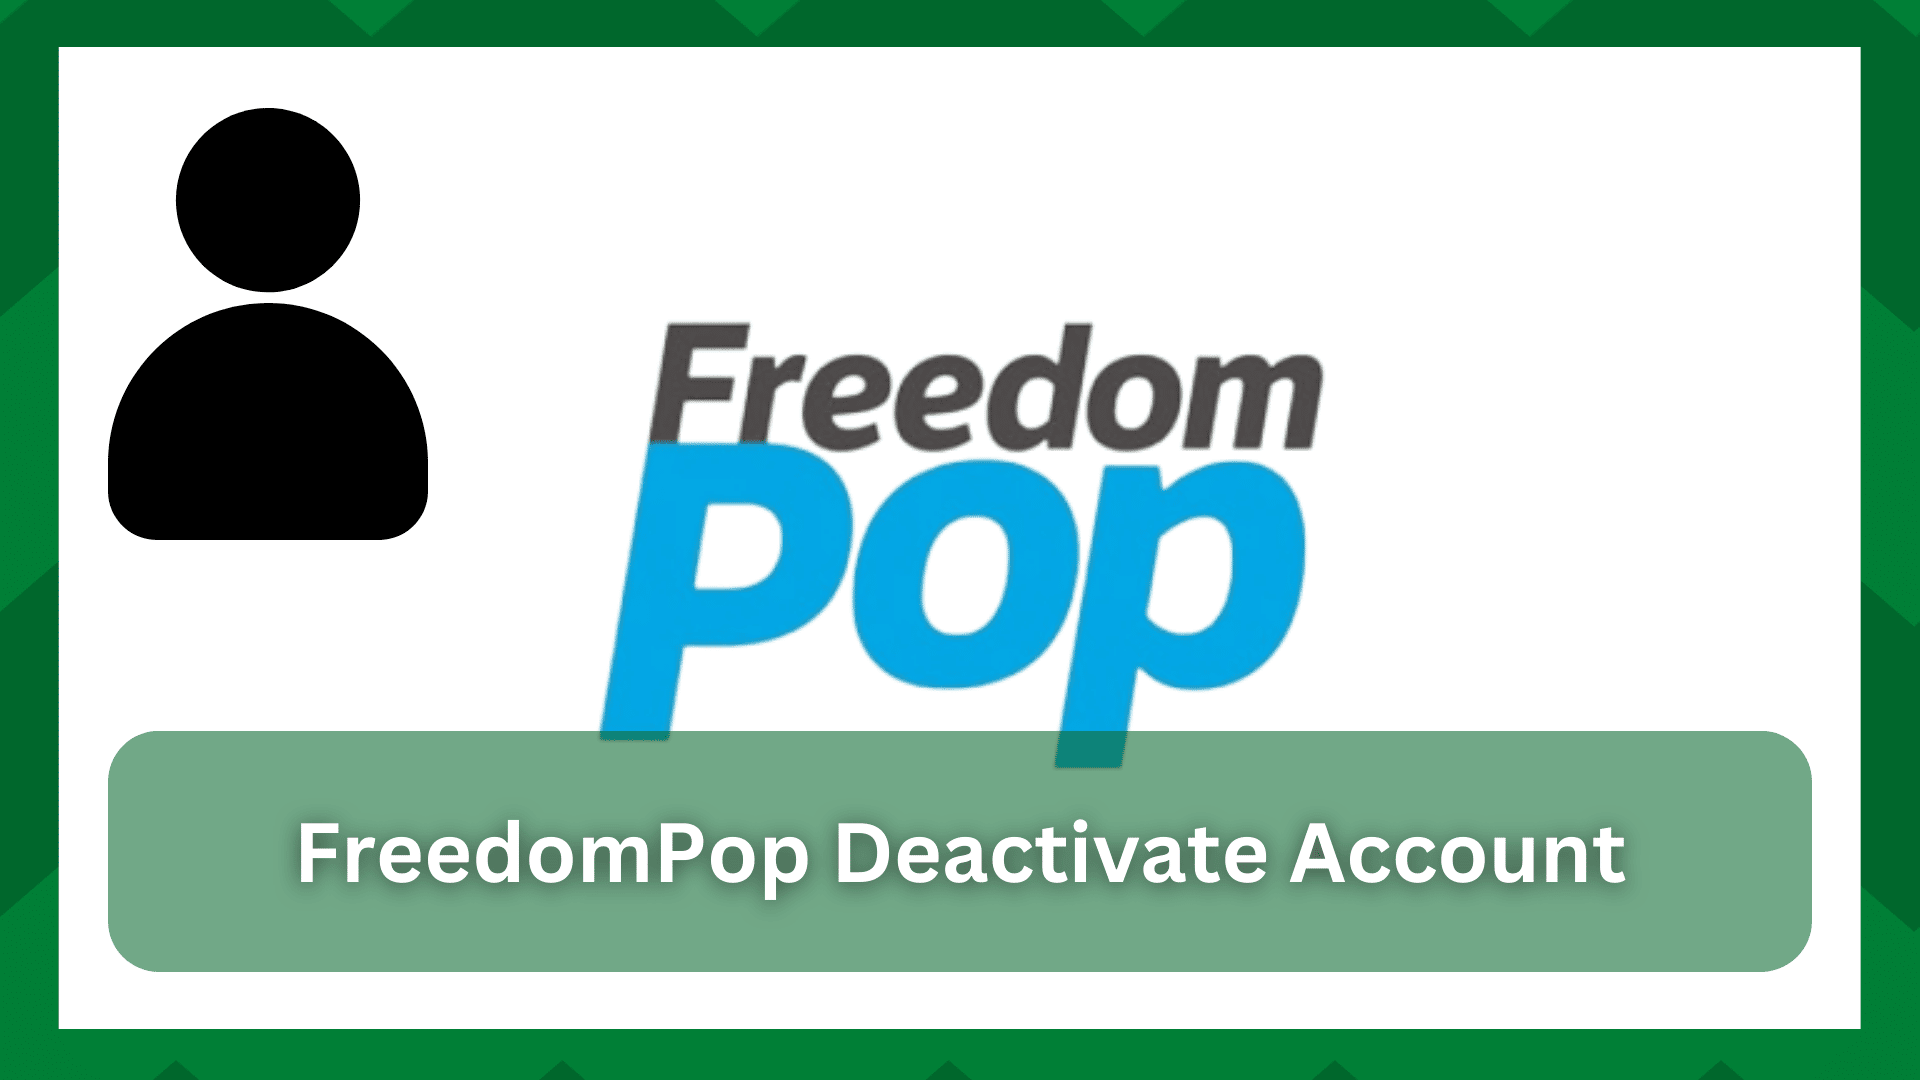 freedompop deactivate account